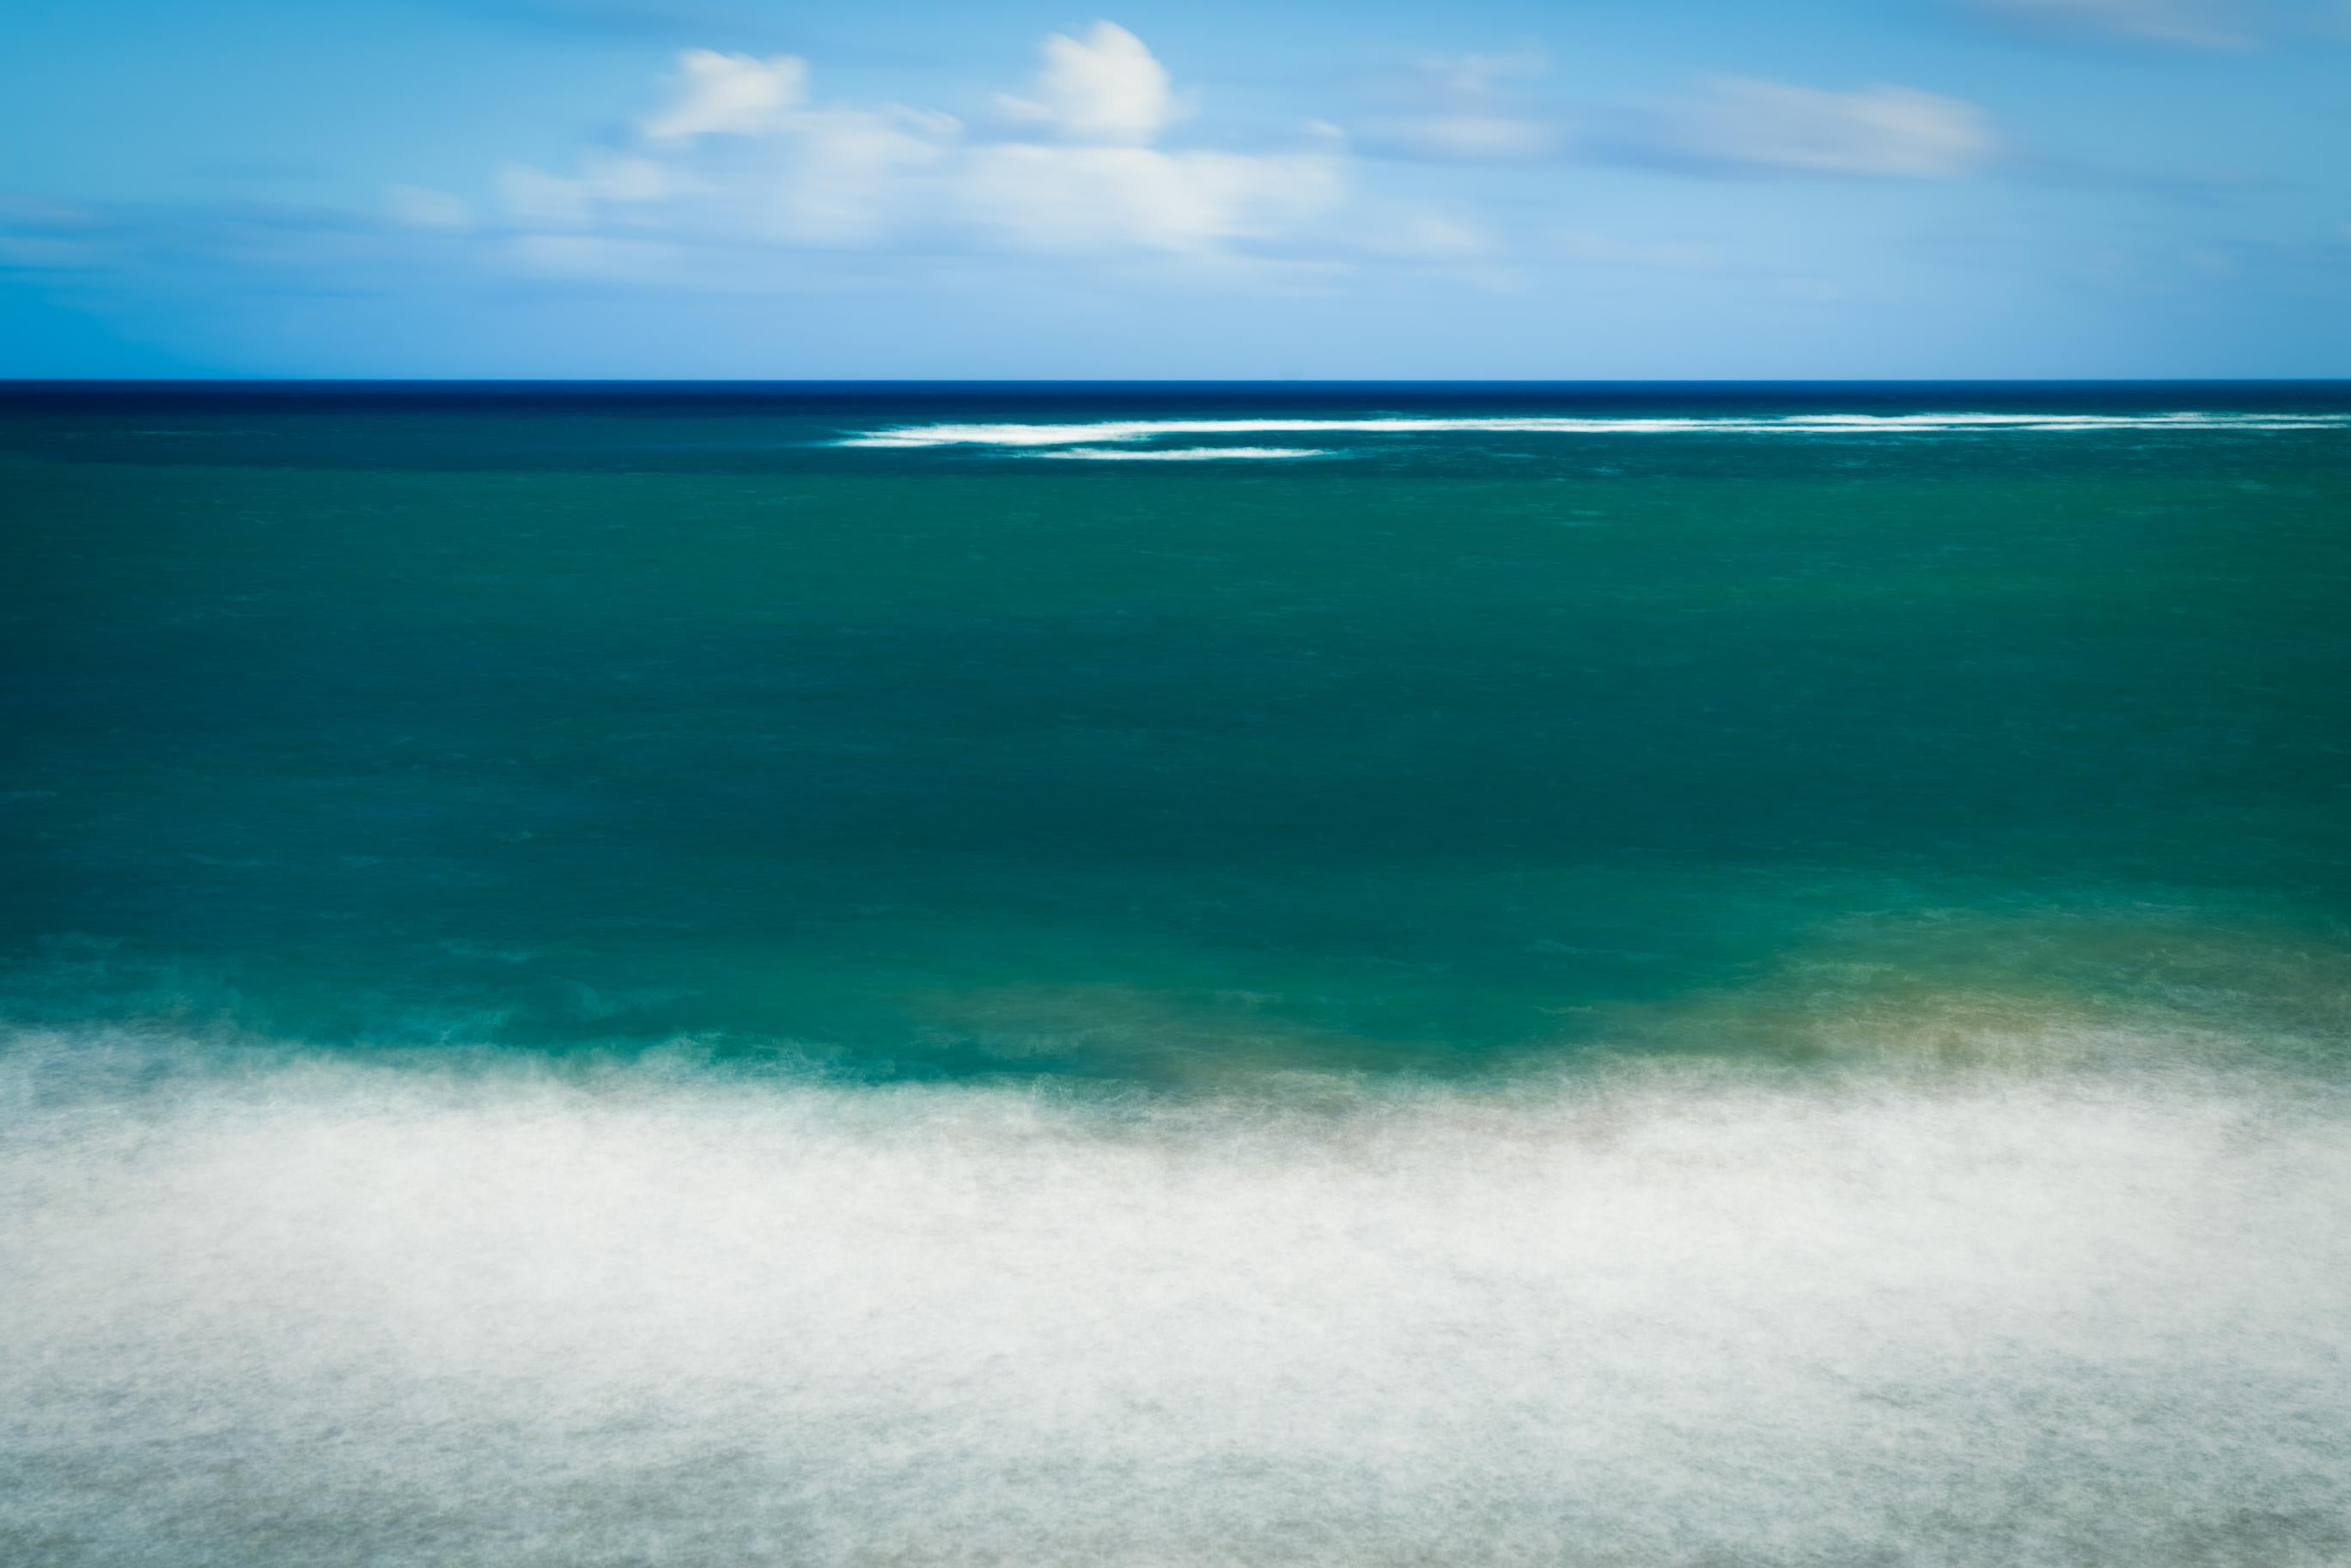 Peter Mendelson Landscape Photograph - "Condado Surf, " Contemporary Coastal Photograph, 20" x 30"